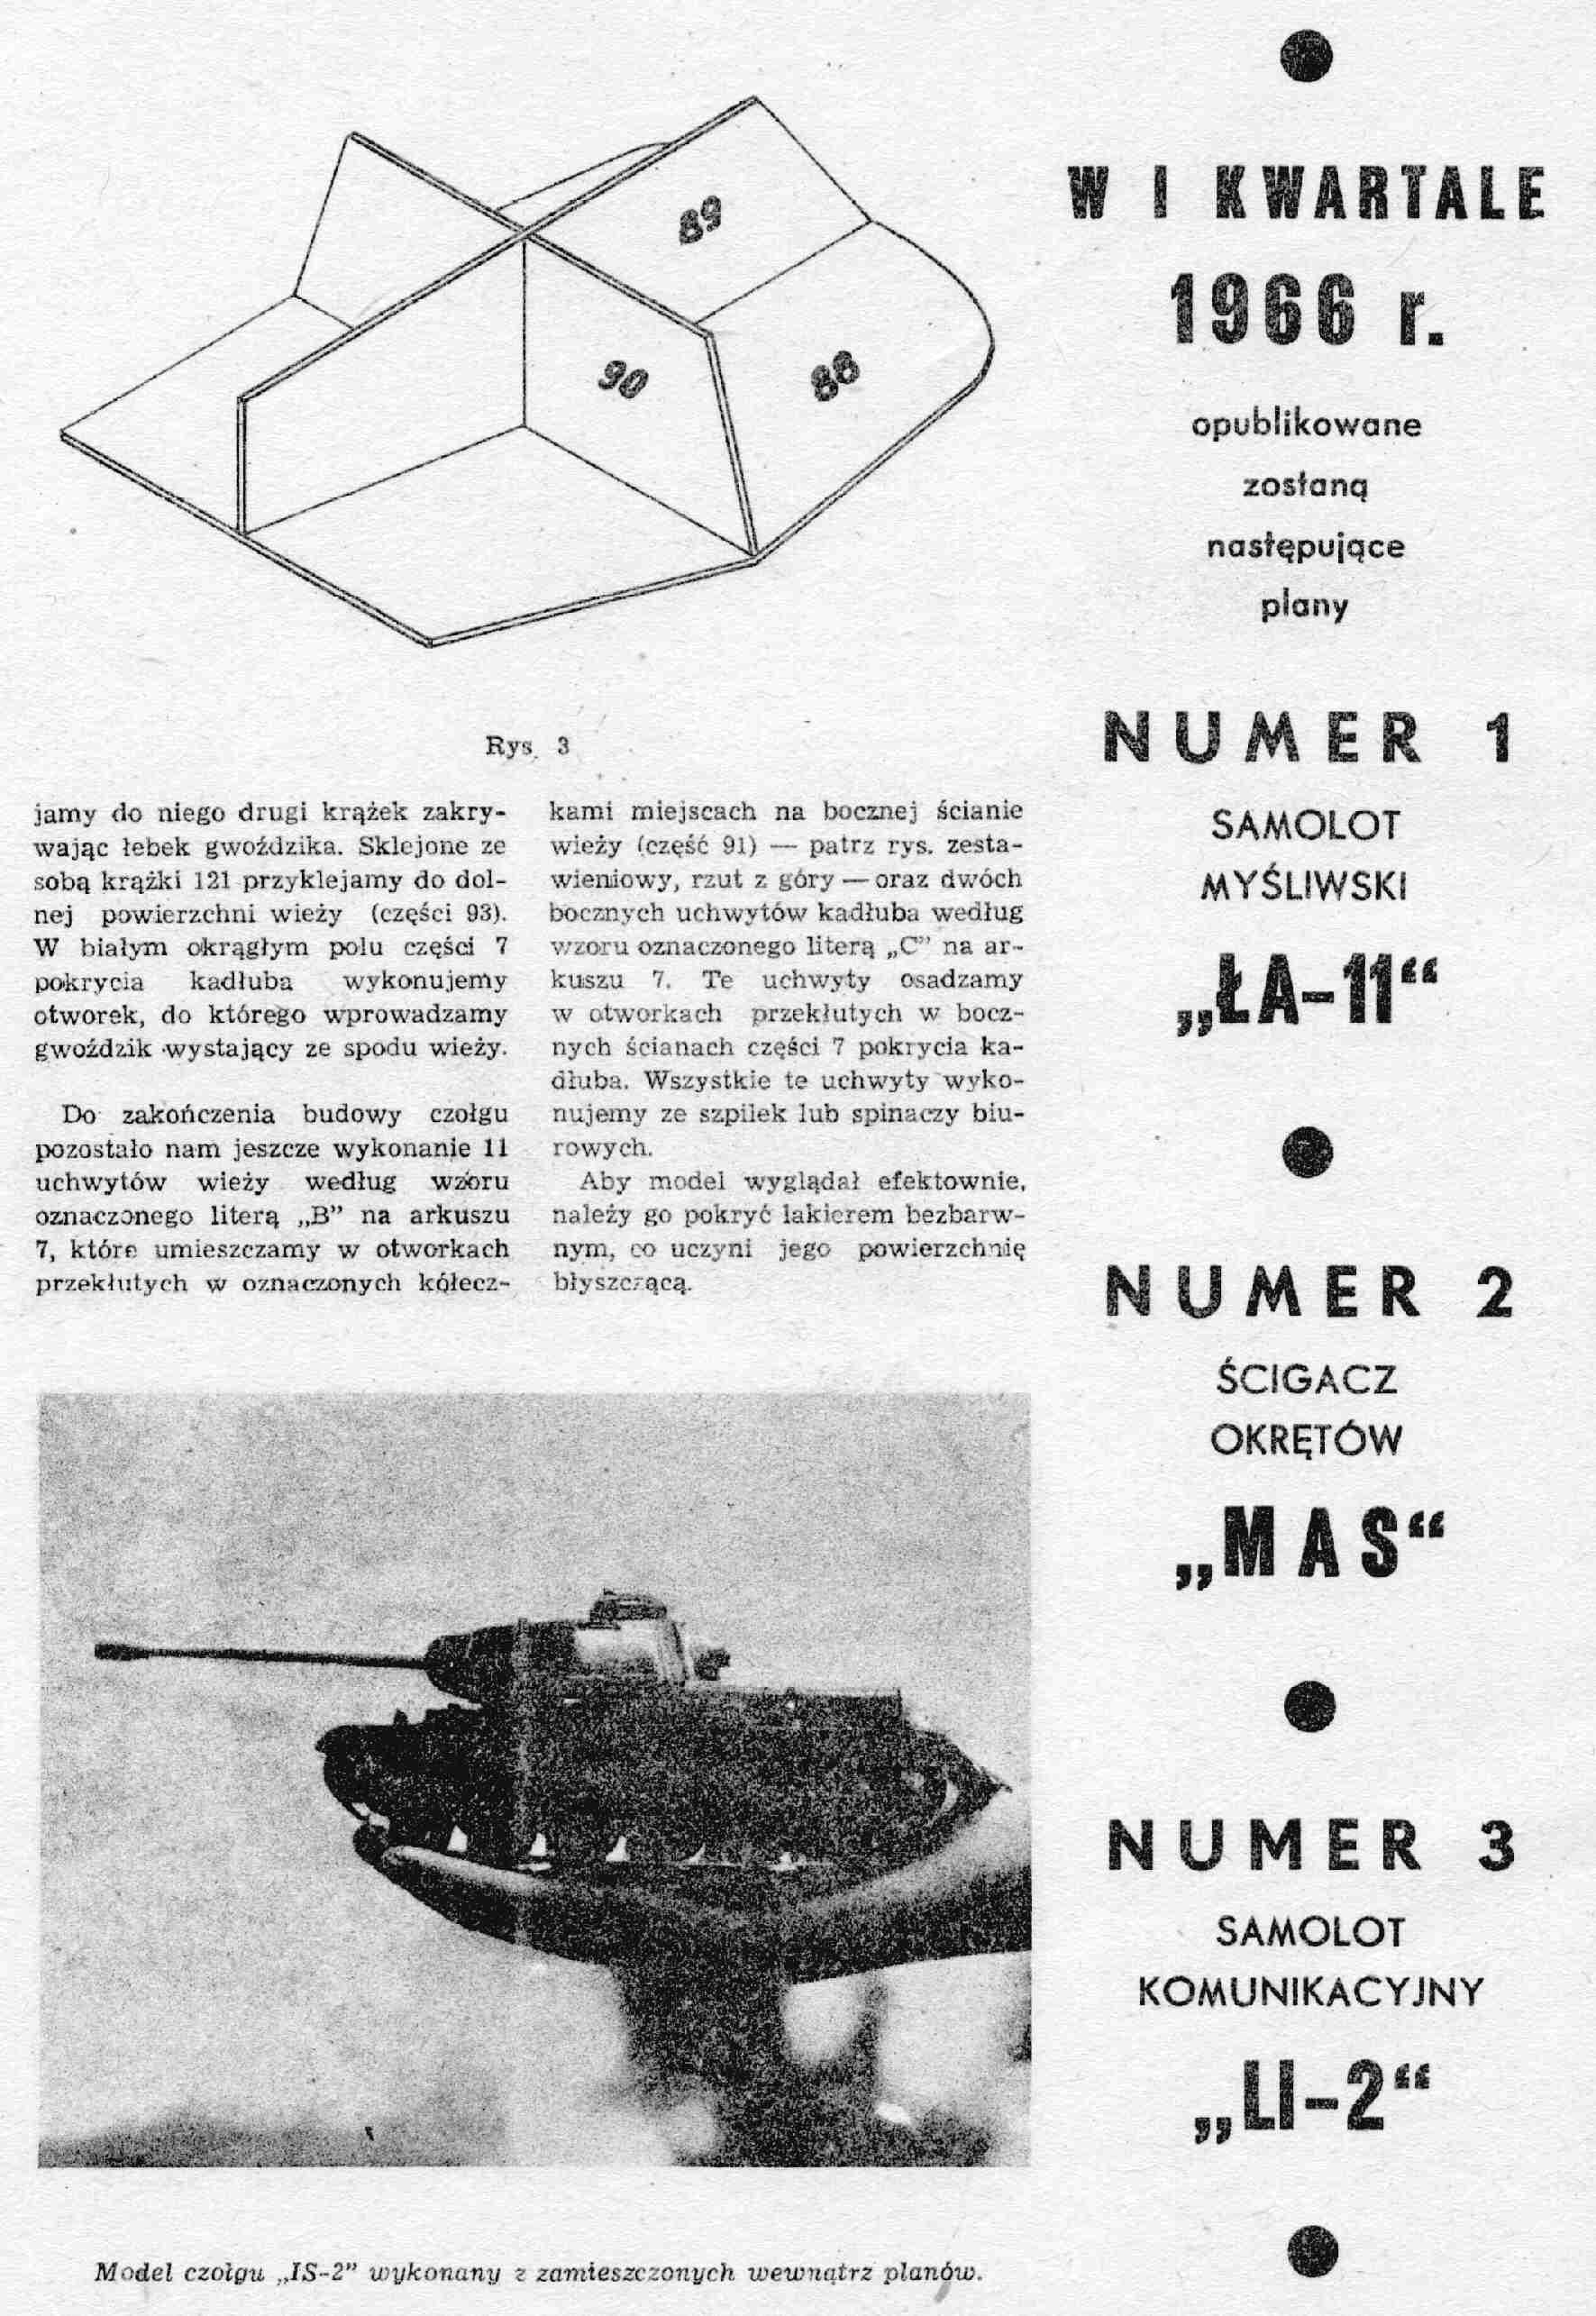 "Maly Modelarz" 12, 1965, 6 c.